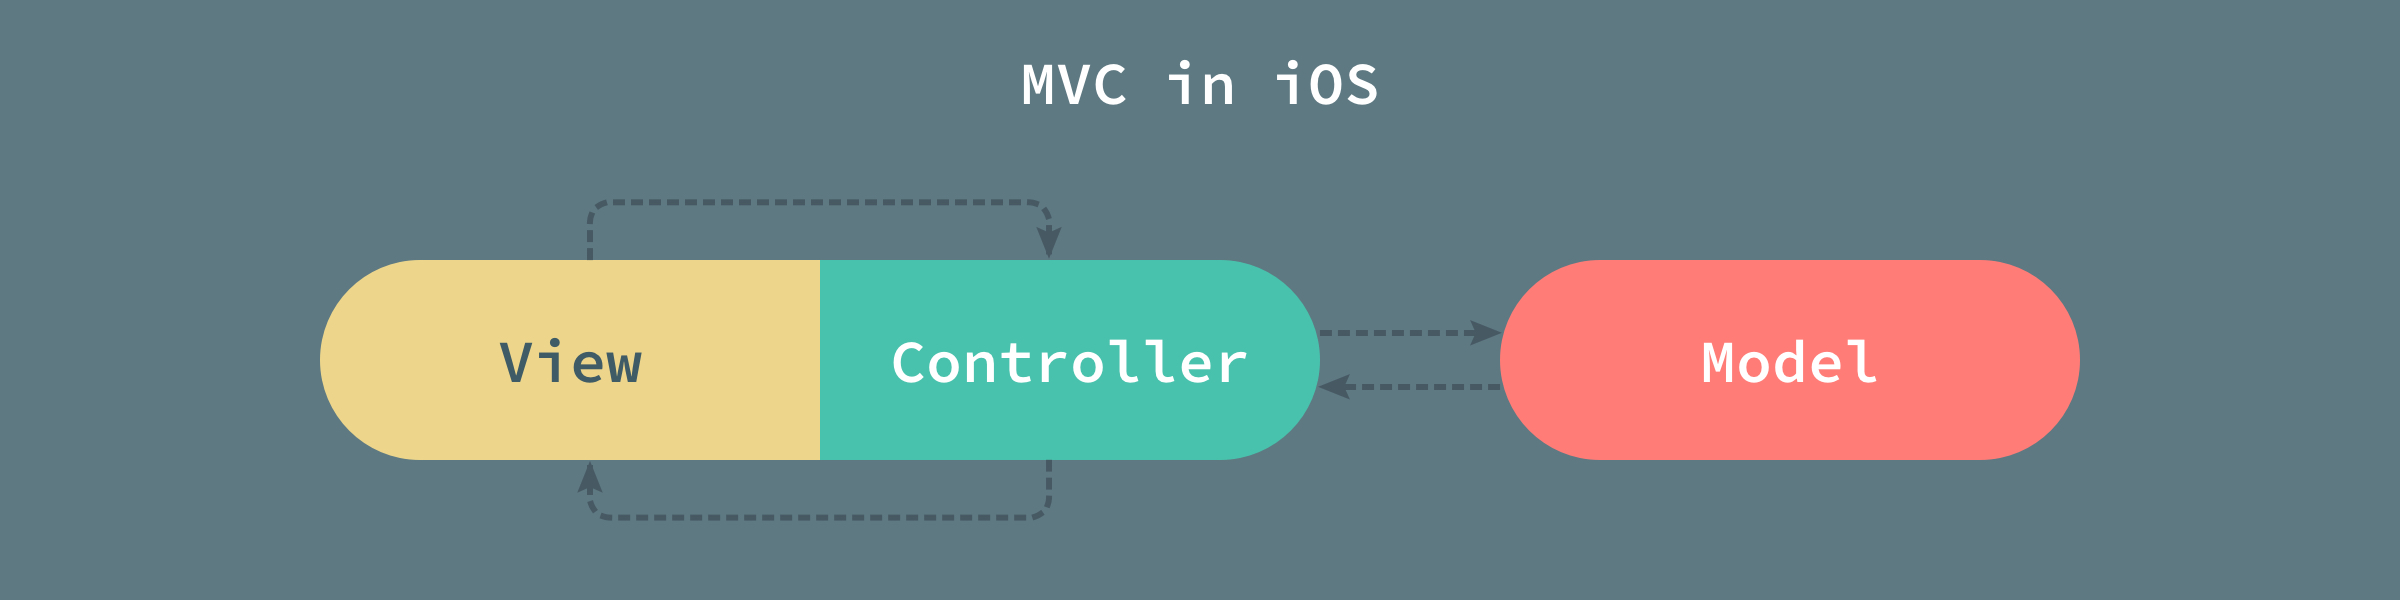 MVC-in-iOS.jpg